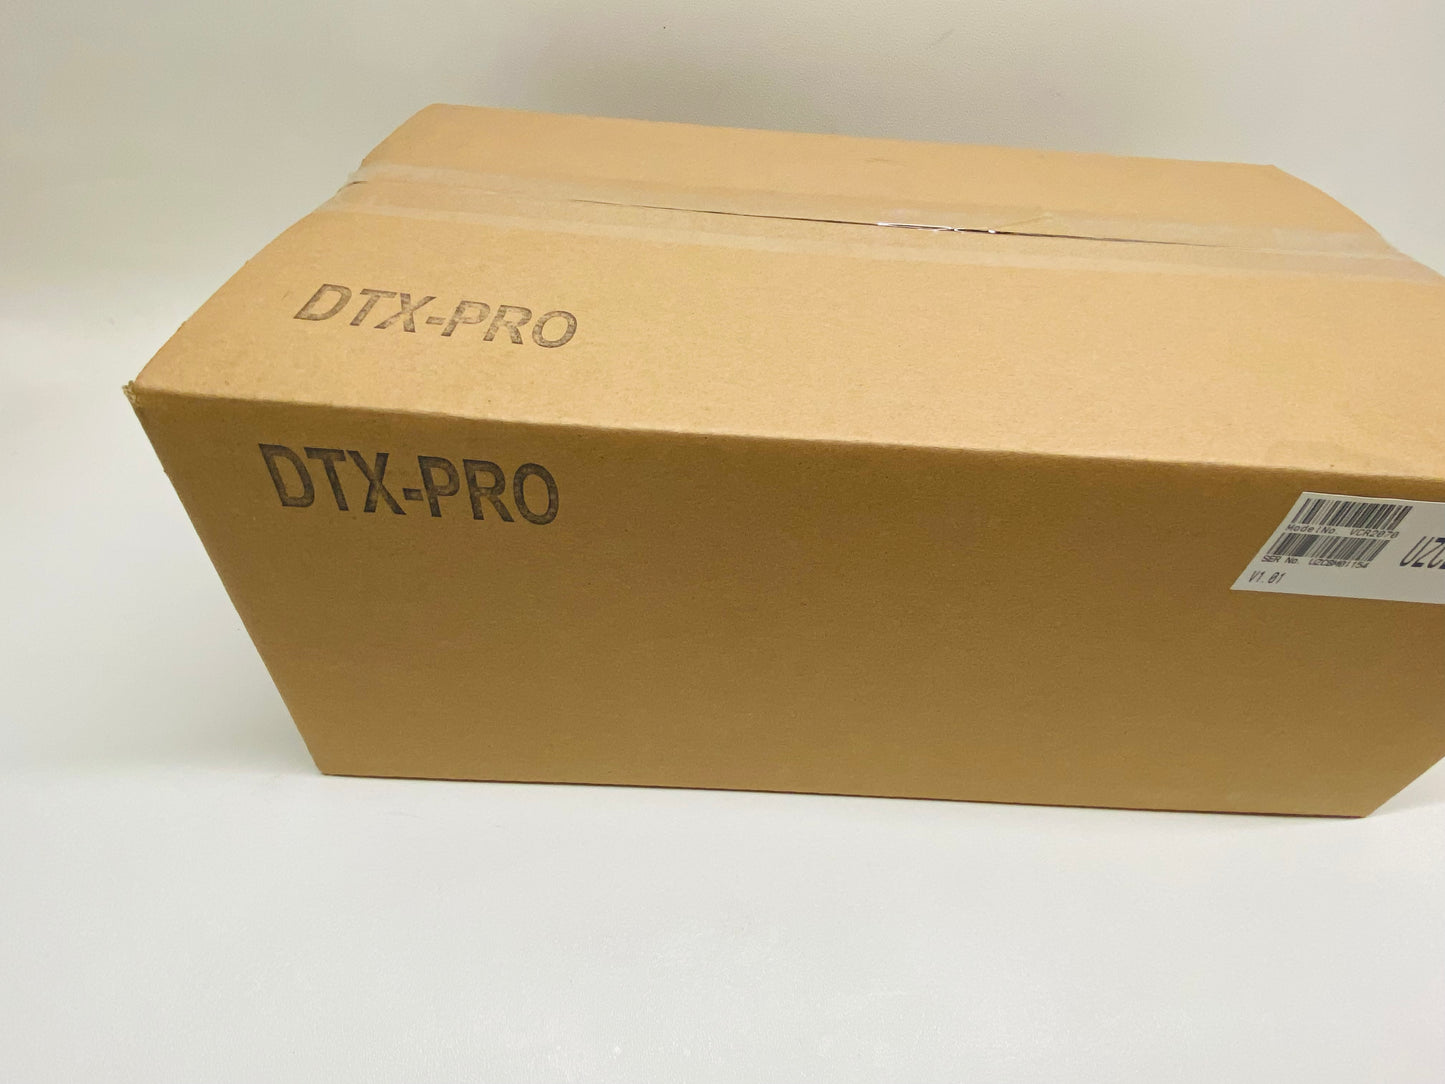 Yamaha DTX-PRO Electronic Drum Module Brain OPEN BOX